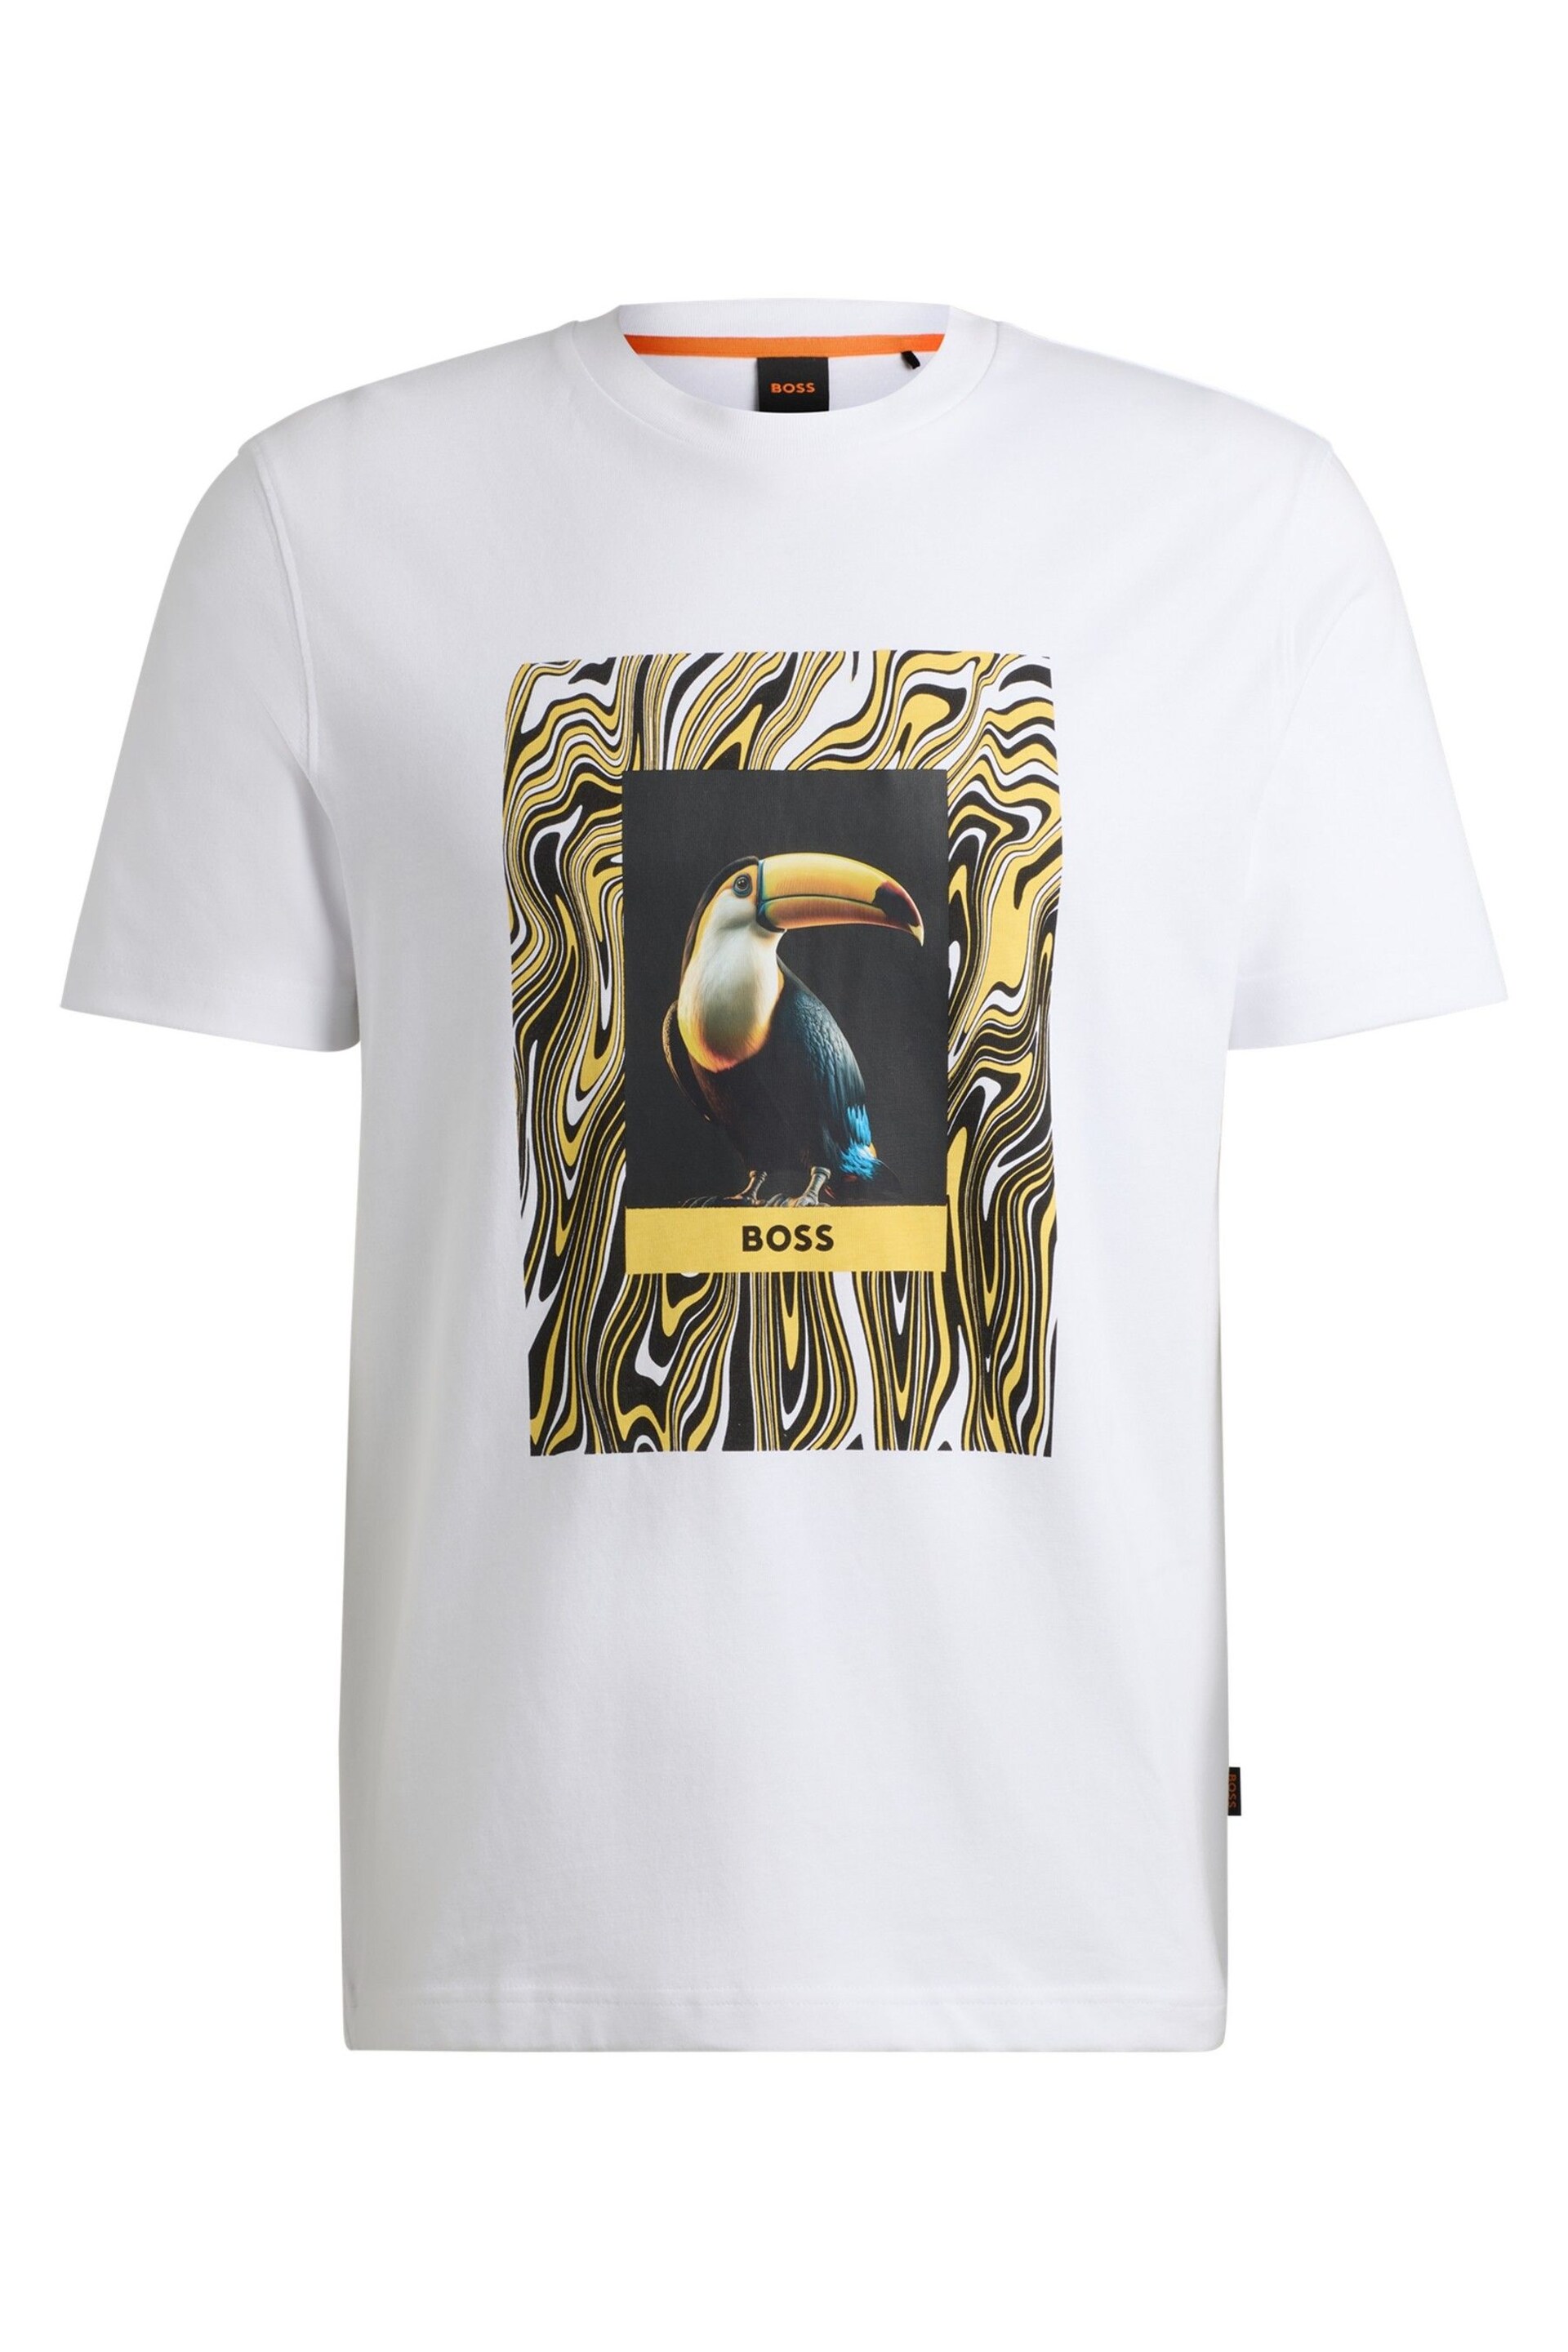 BOSS White/Yellow Cotton-Jersey Regular-Fit T-Shirt With Seasonal Artwork - Image 5 of 5